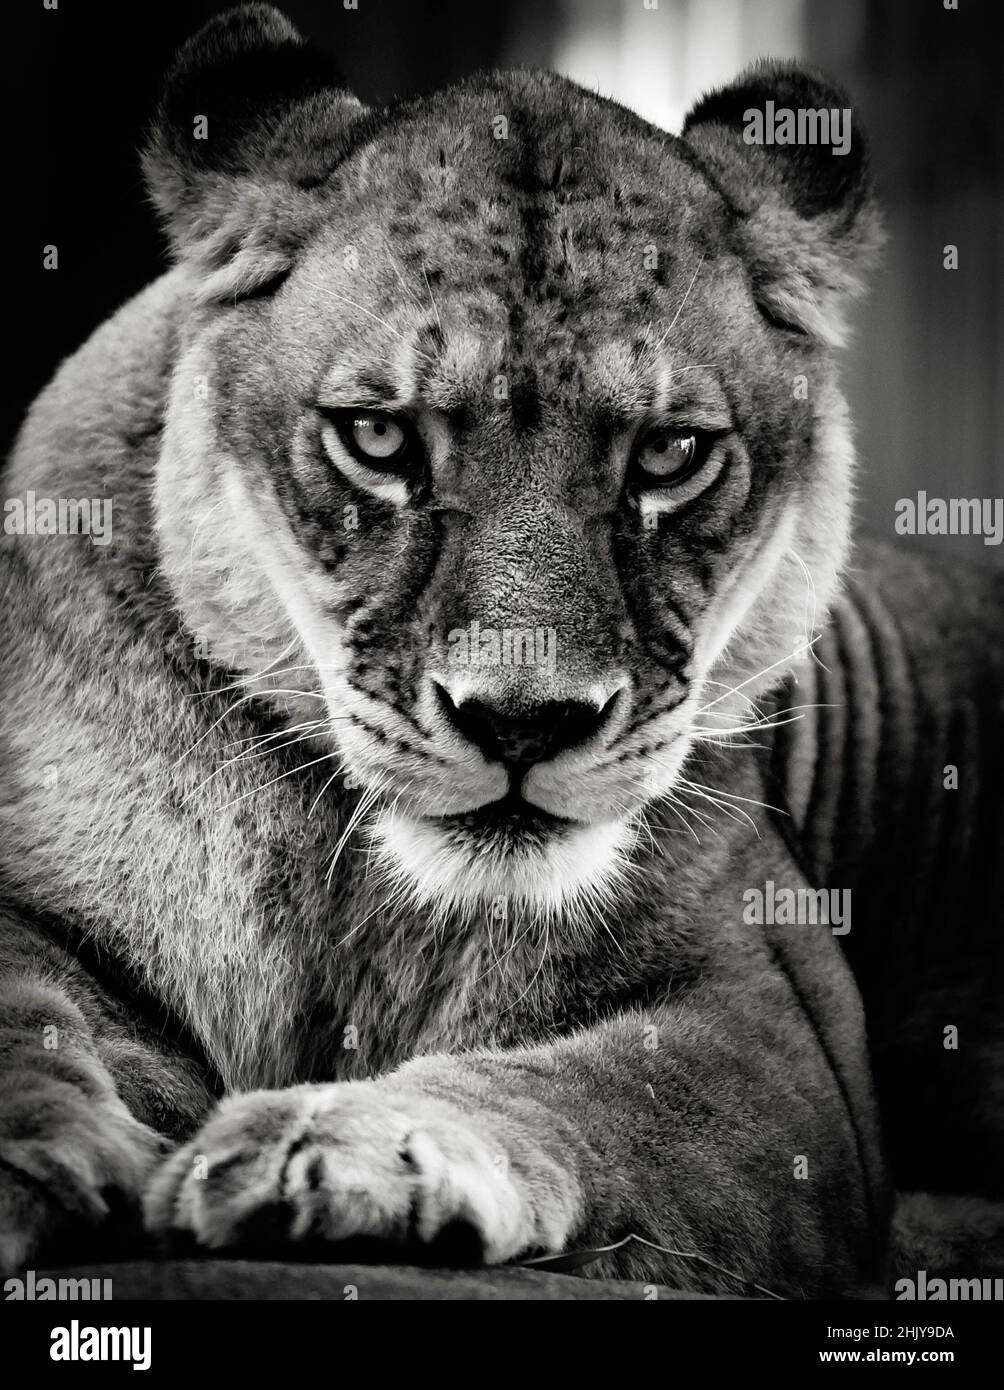 Retrato de la leona mirando y mirando la cámara. Blanco y negro monocromo Foto de stock